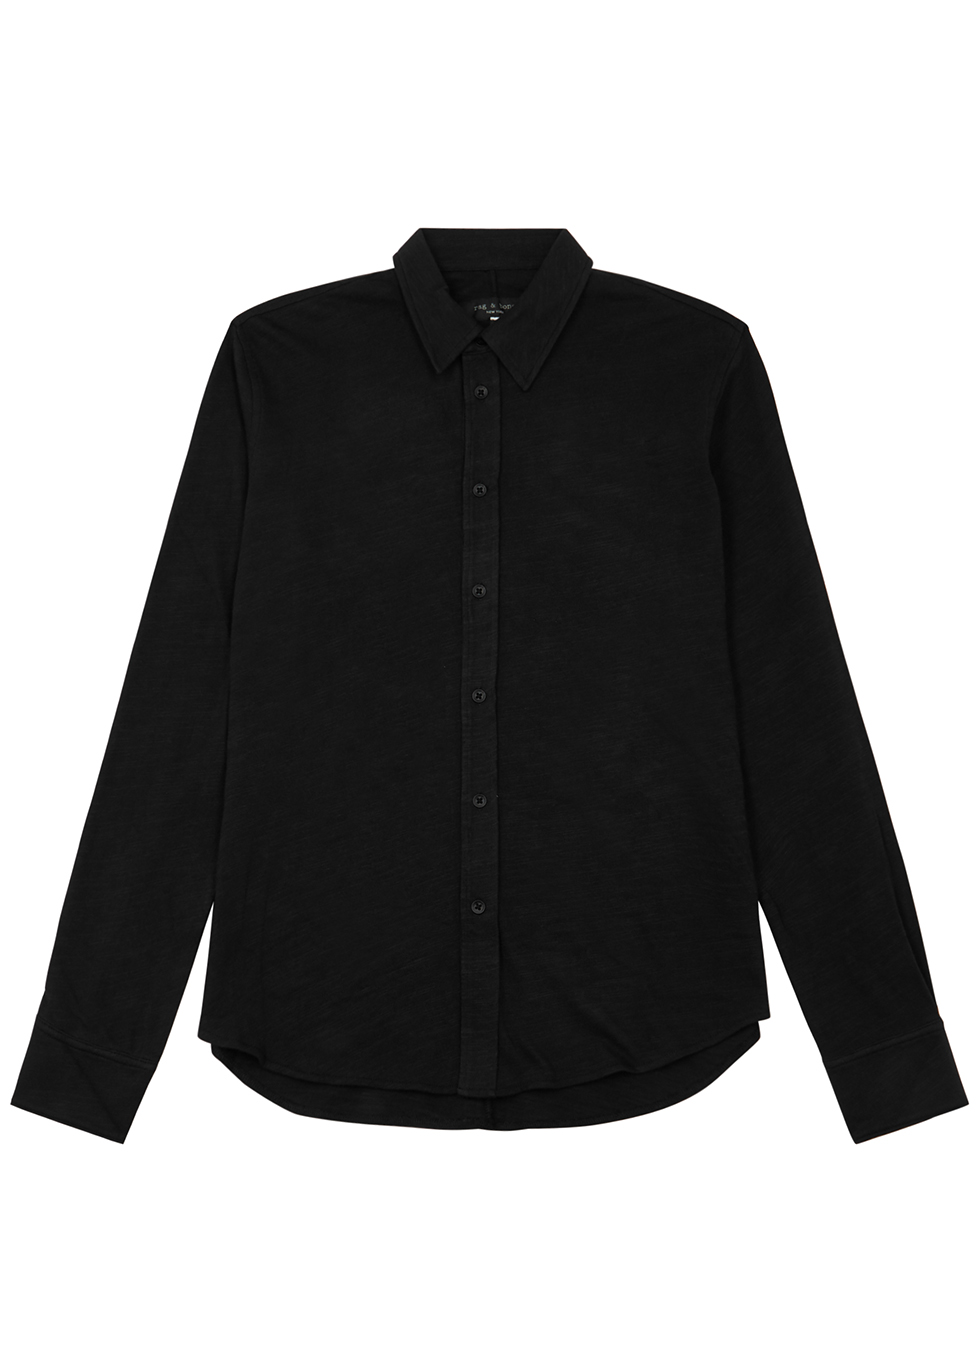 rag & bone Tomlin black slubbed cotton-jersey shirt - Harvey Nichols